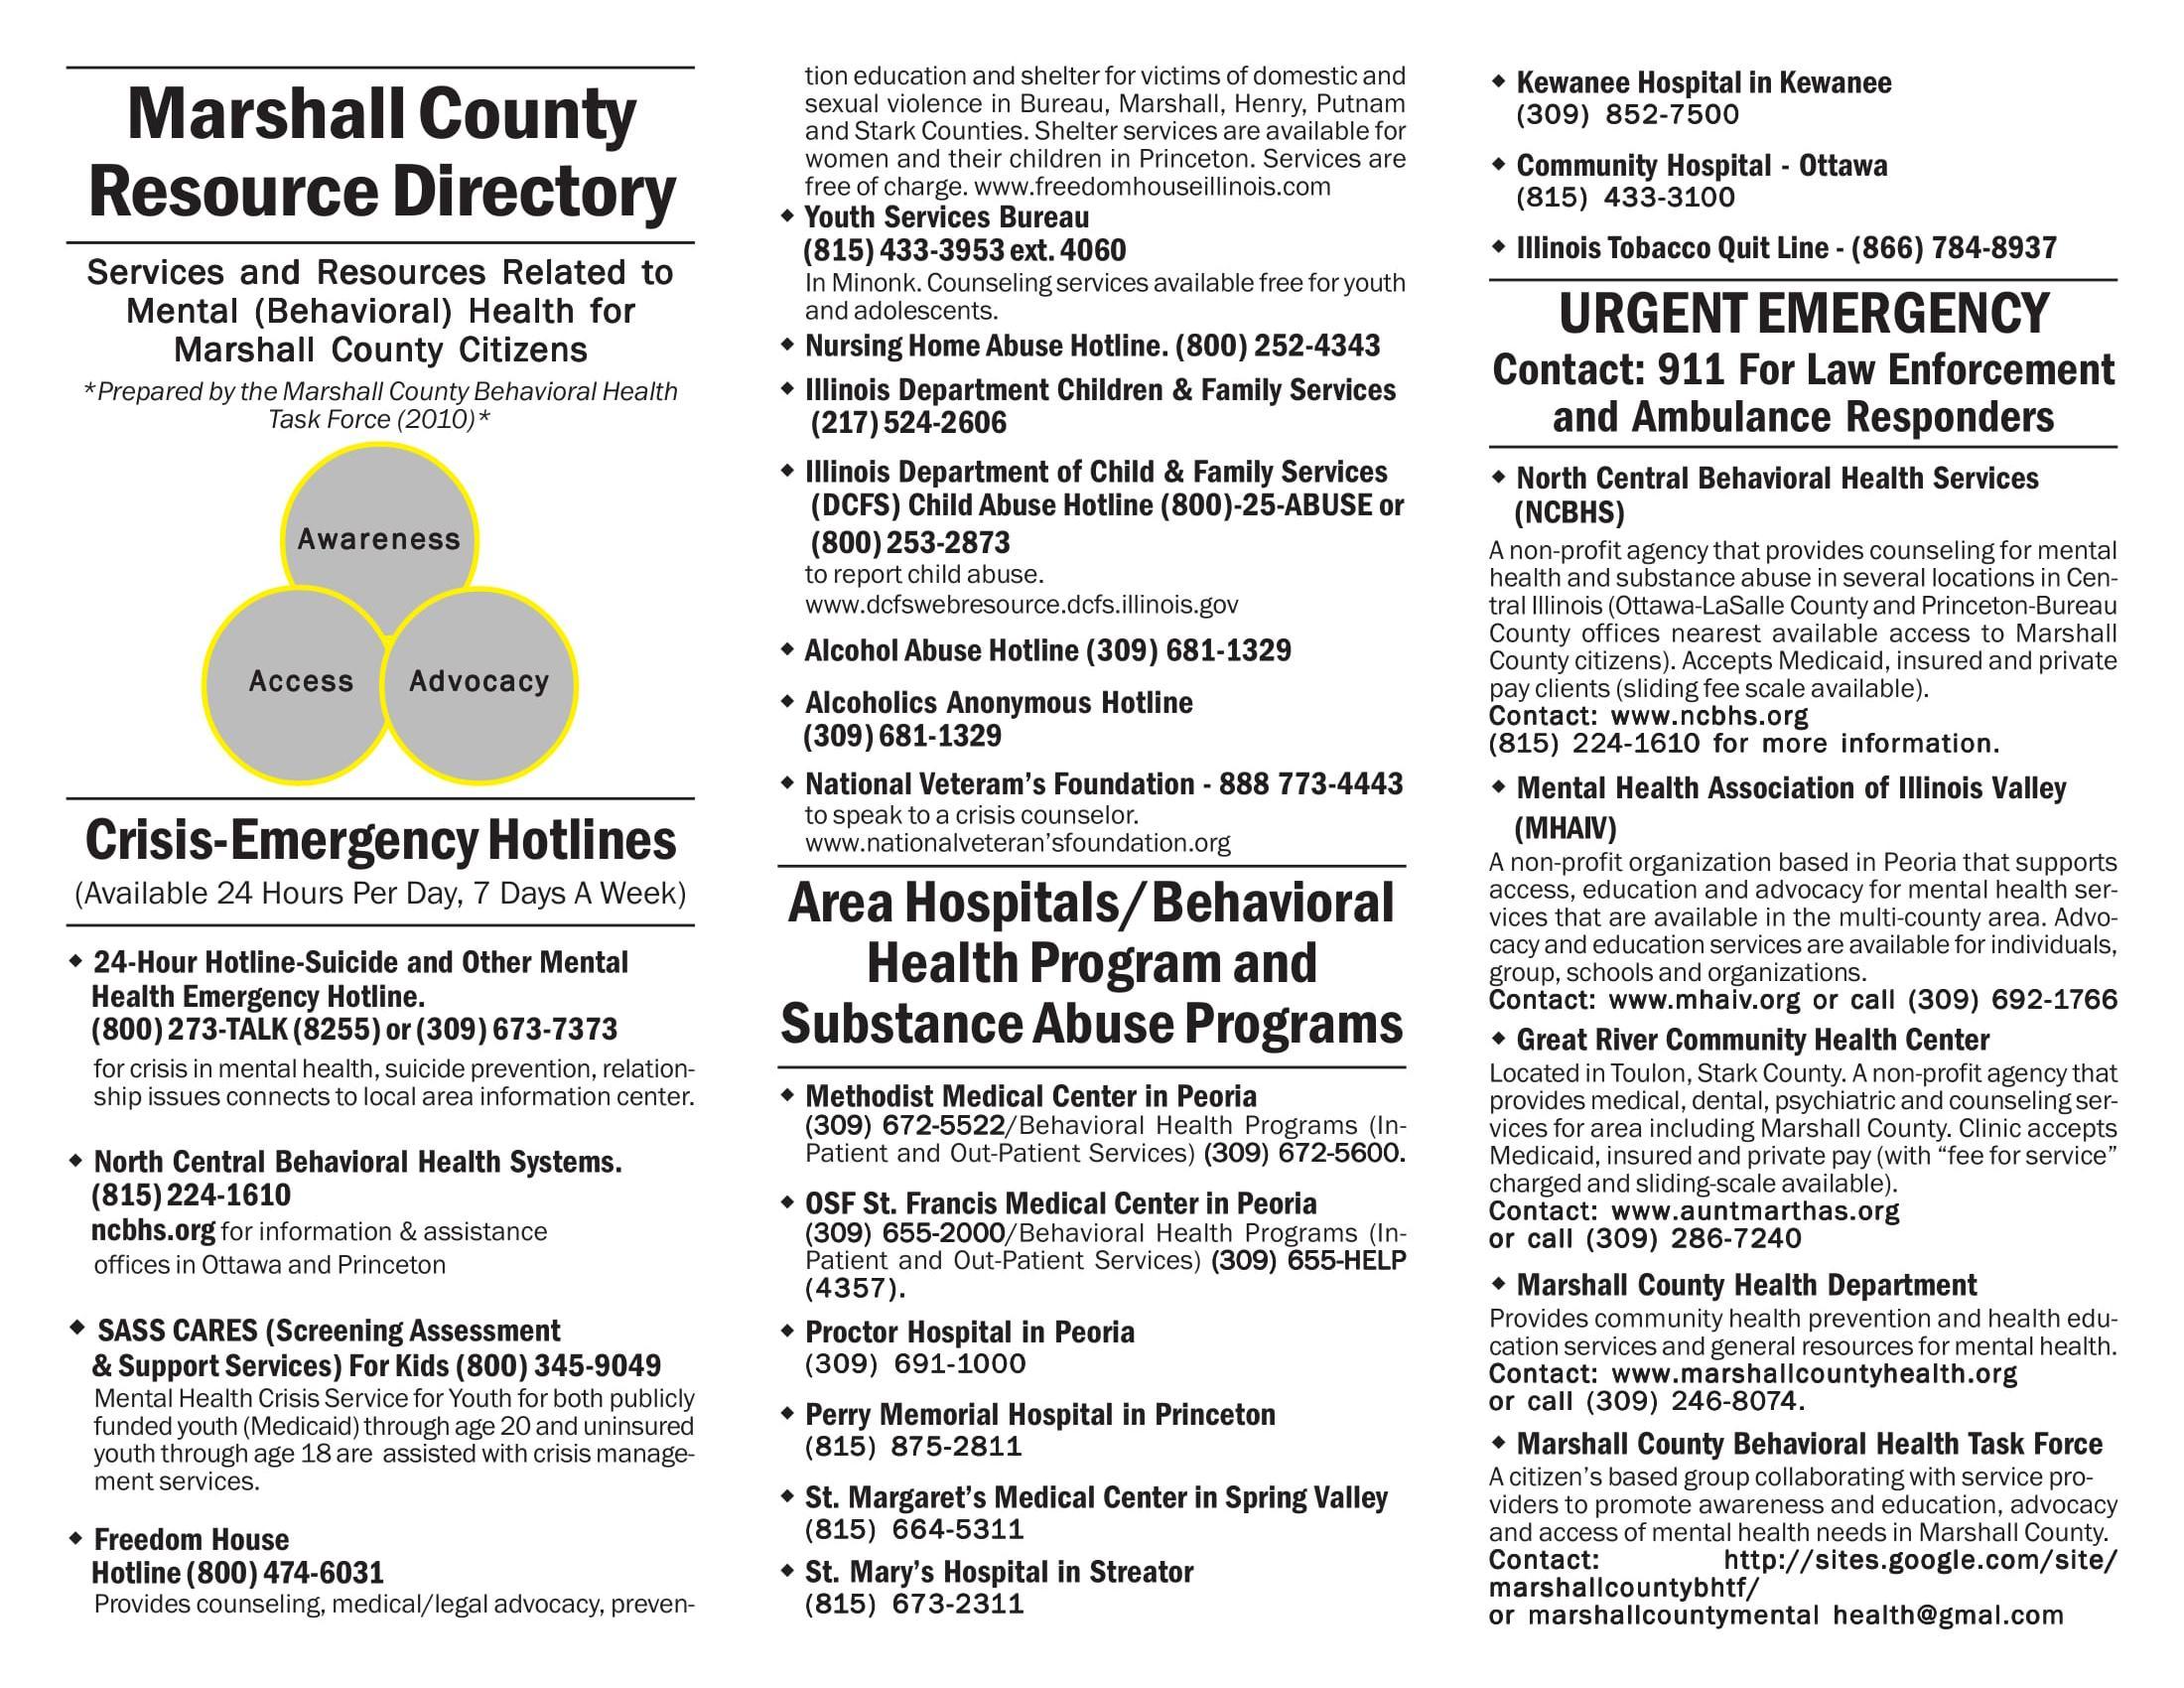 Marshall County Resource Directory